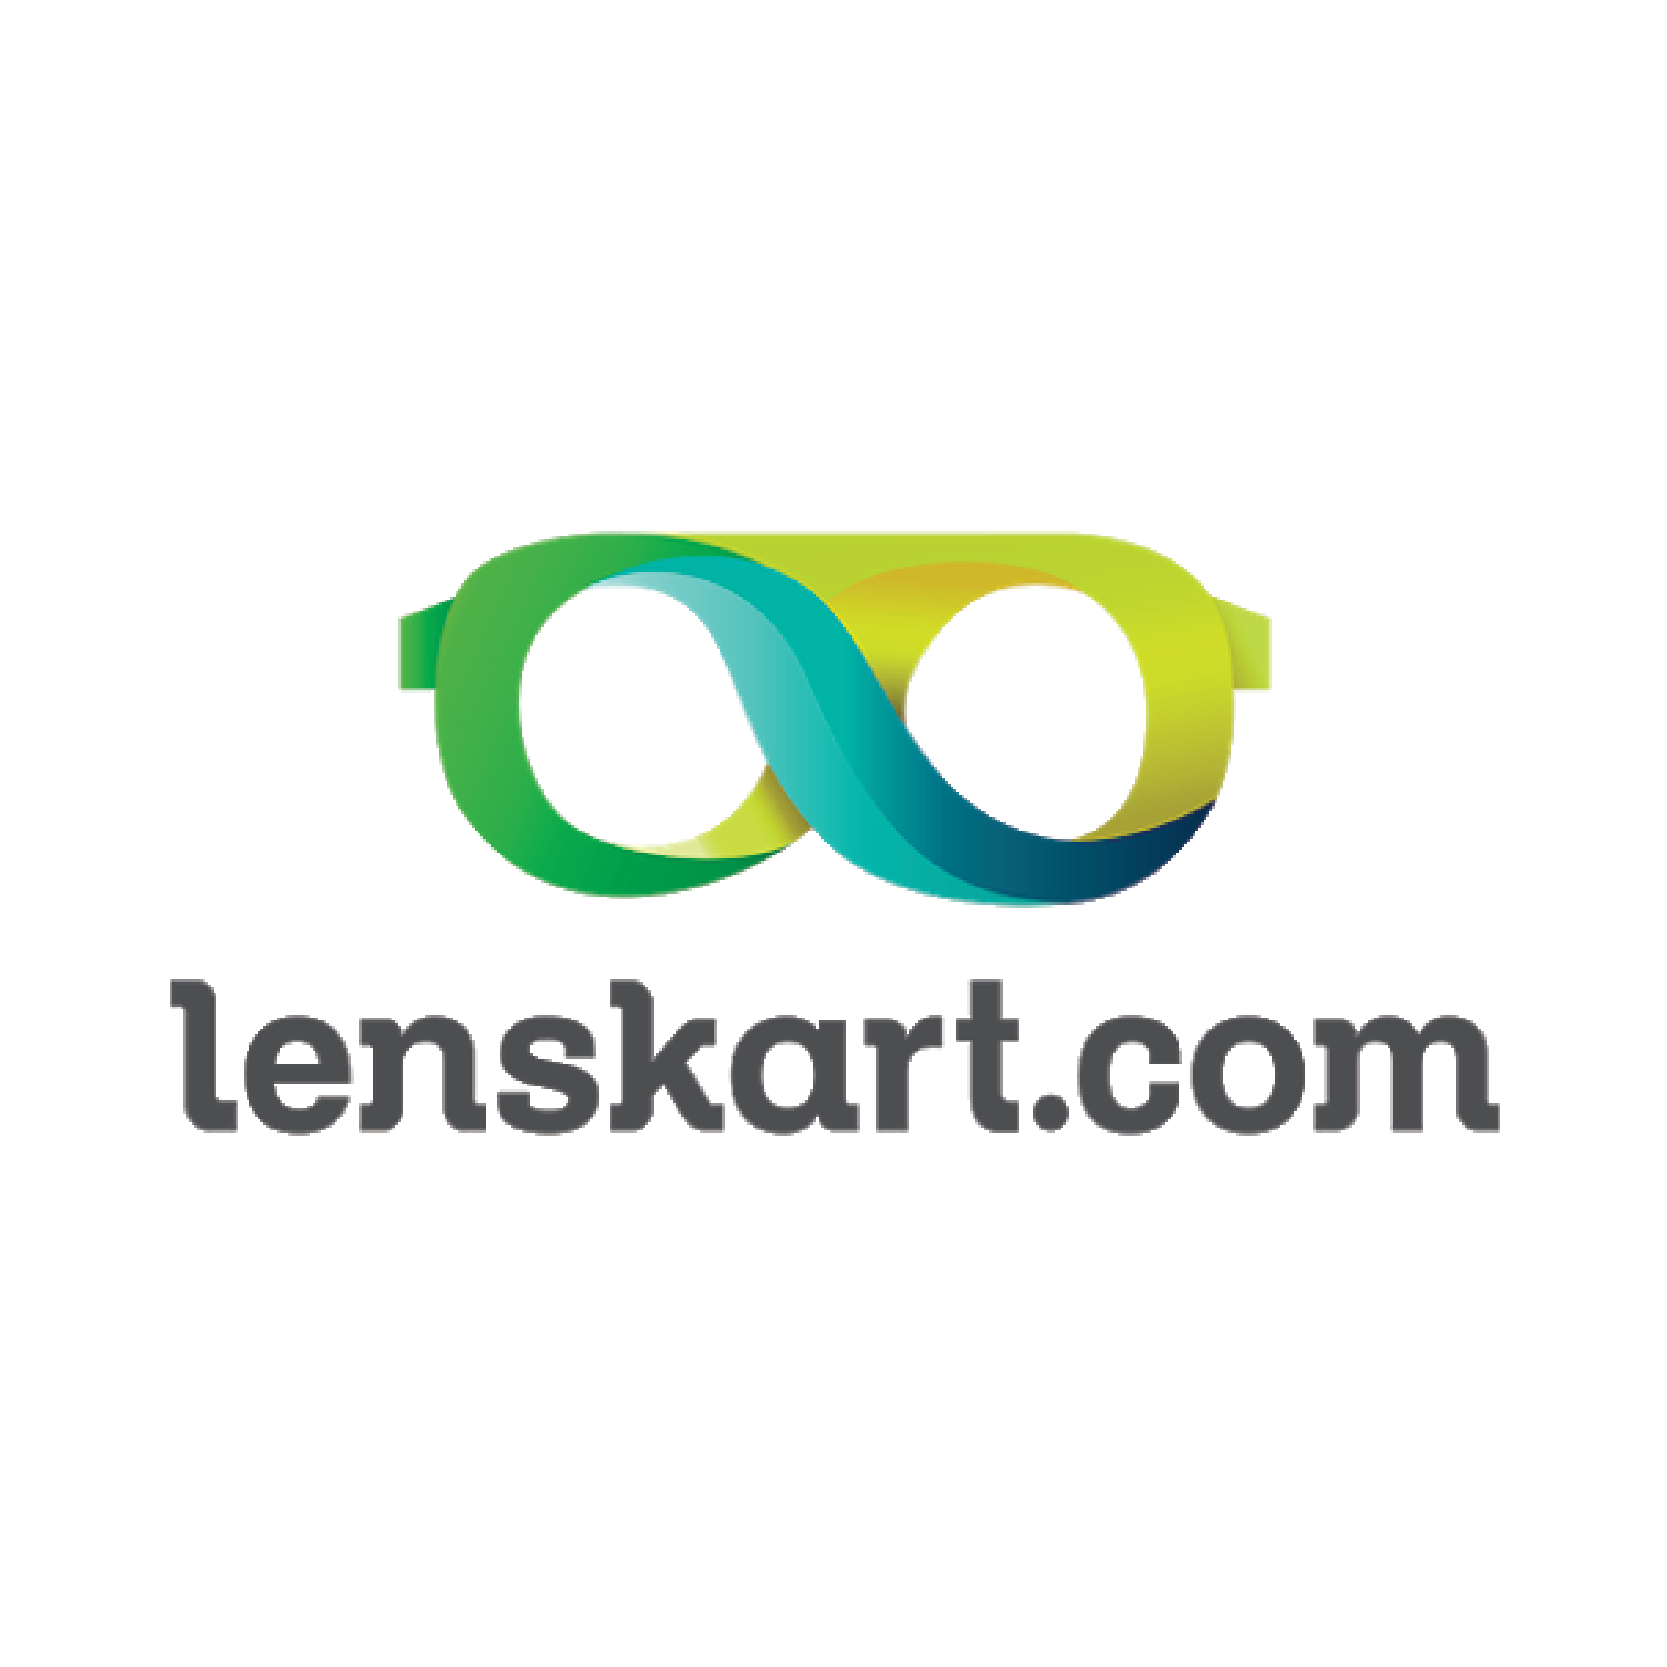 Peyush Bansal - How Did He Build Lenskart From Scratch?